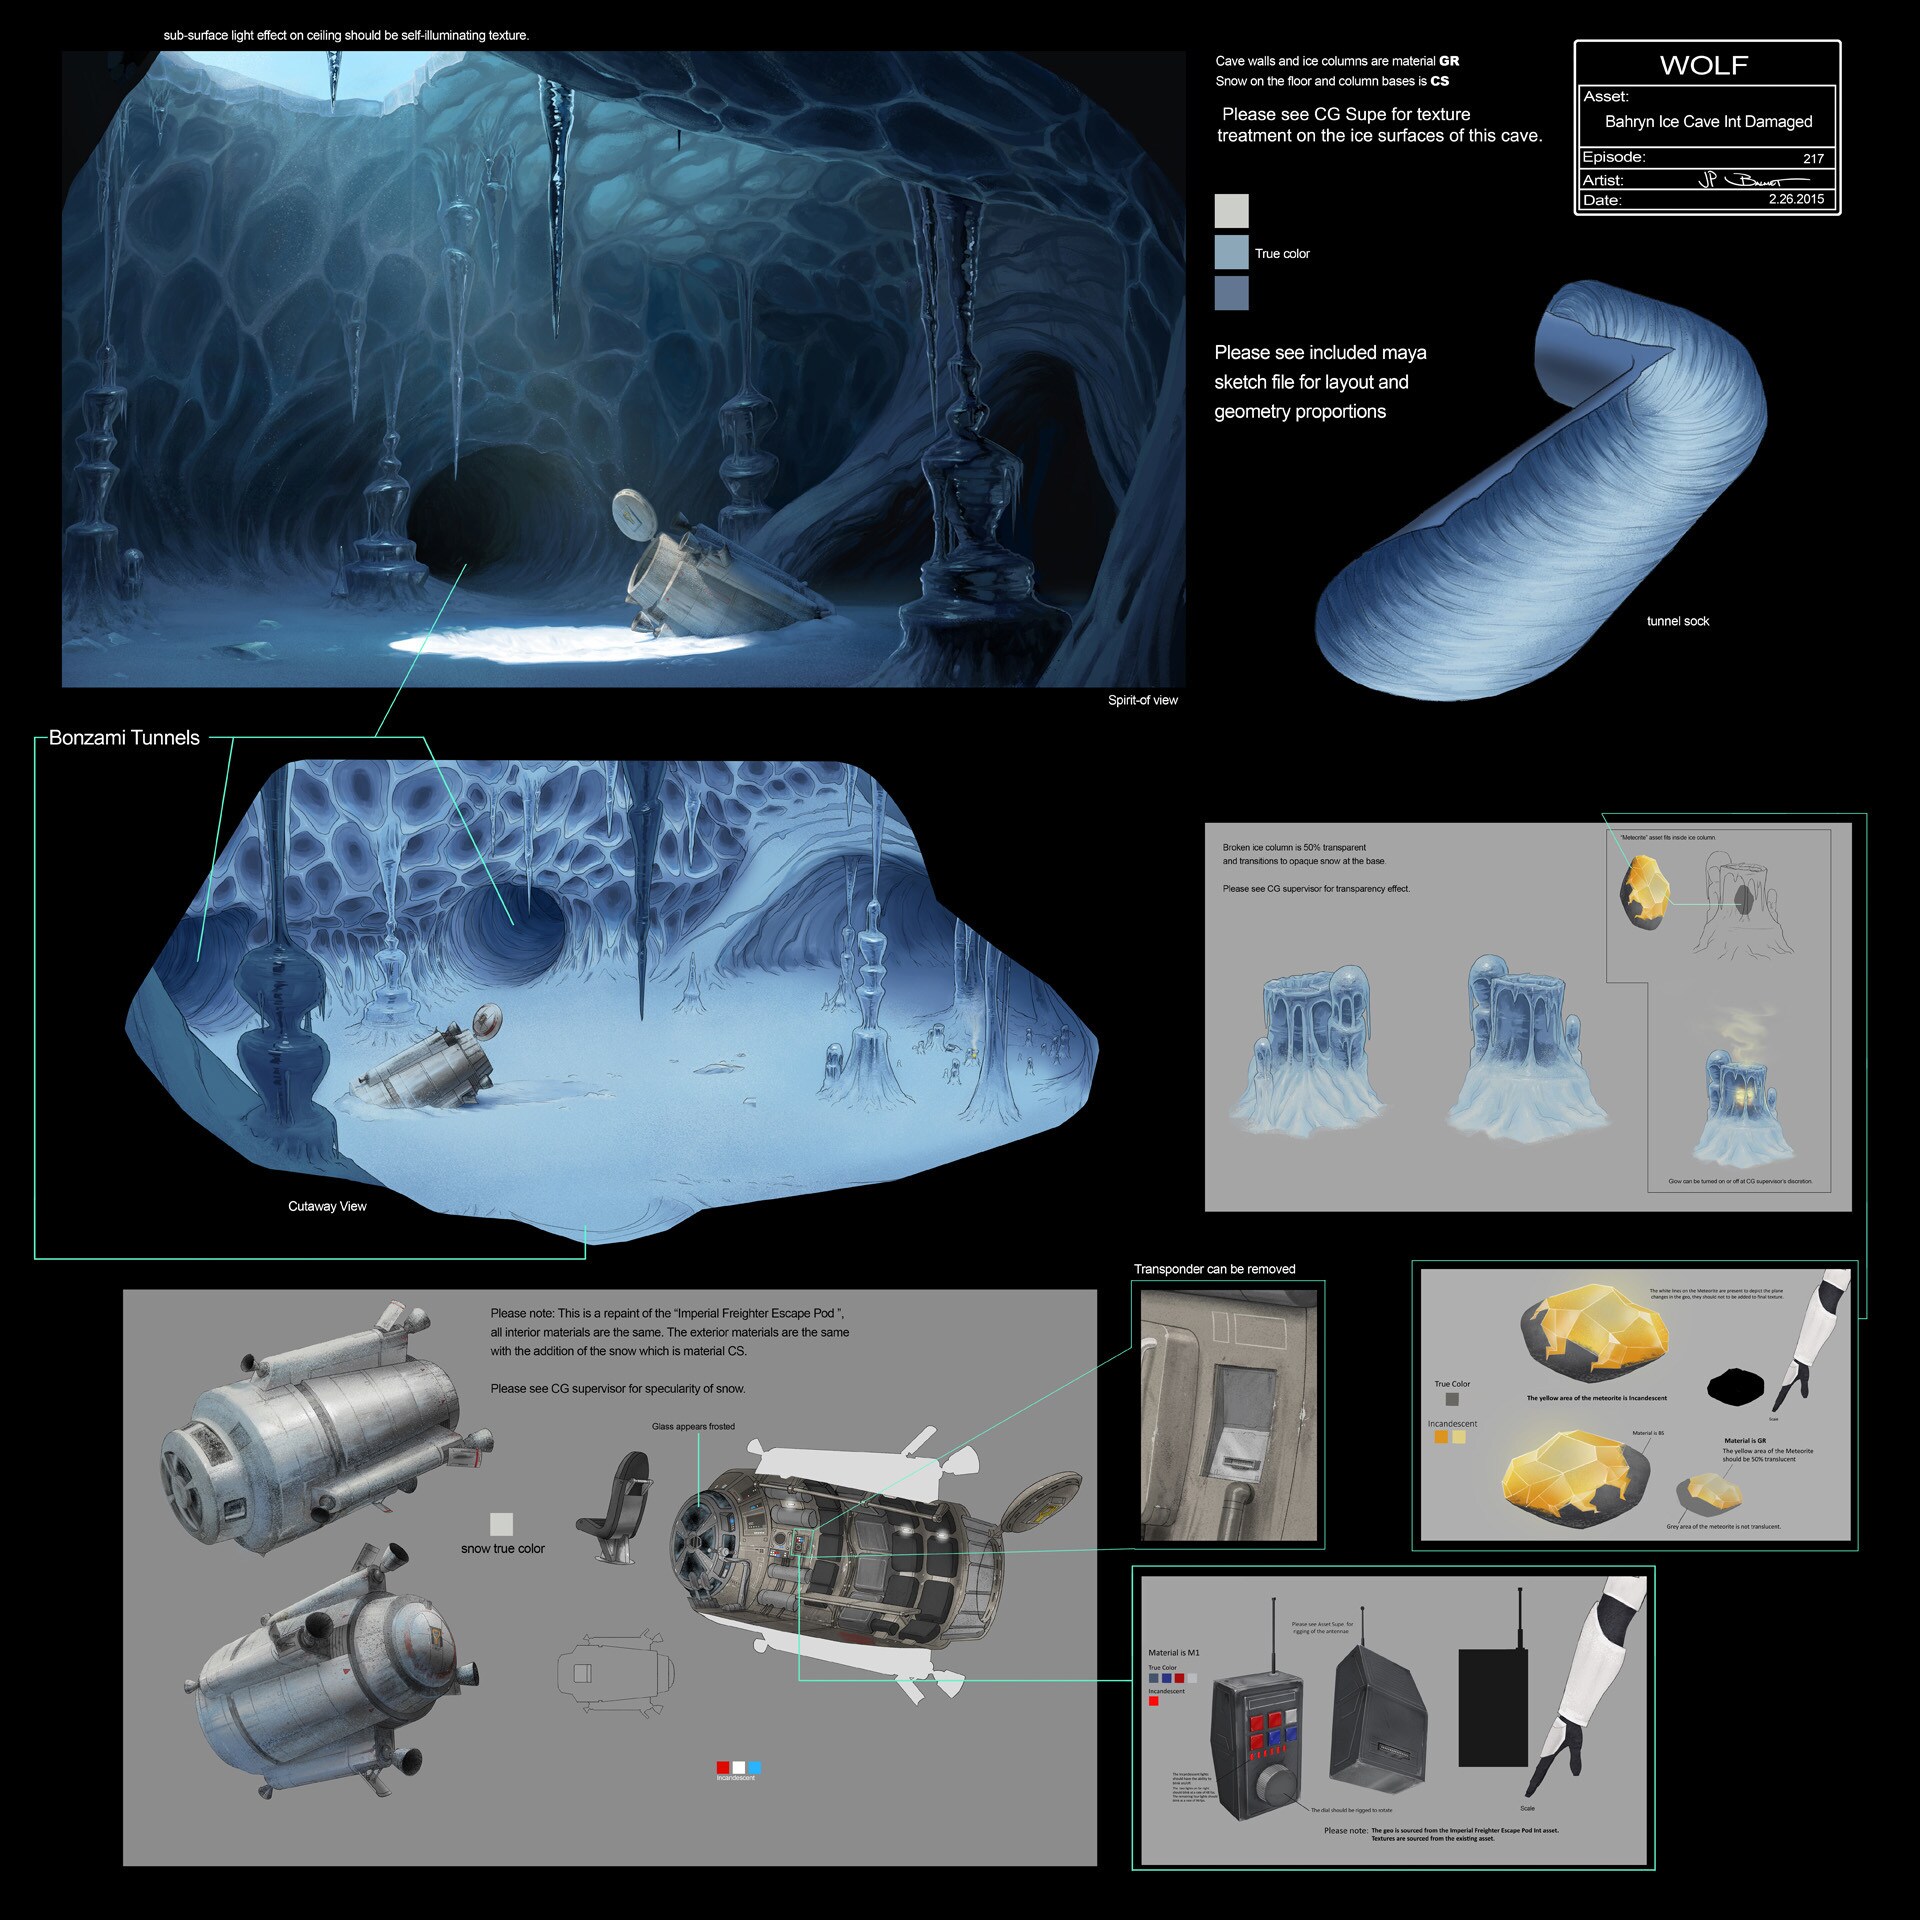 Bahryn ice cave interior illustration by JP Balmet.